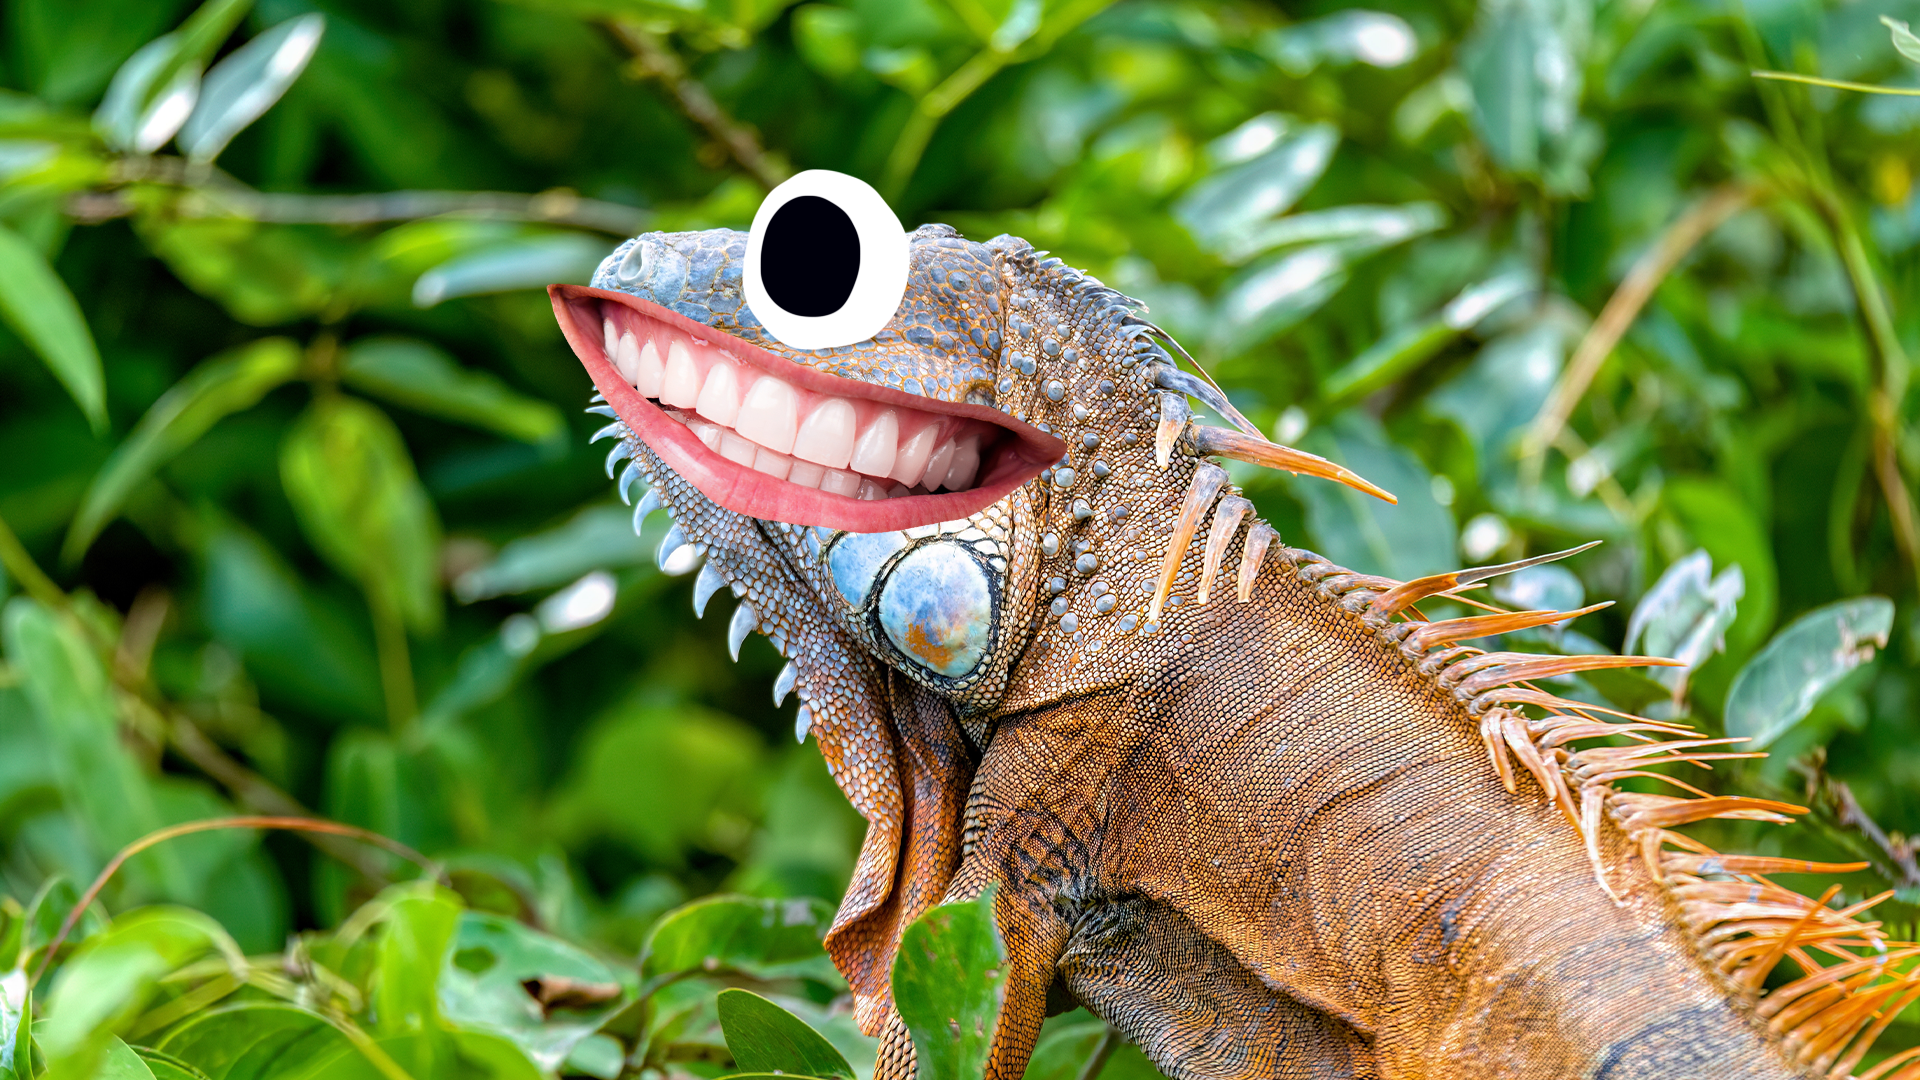 Goofy looking iguana